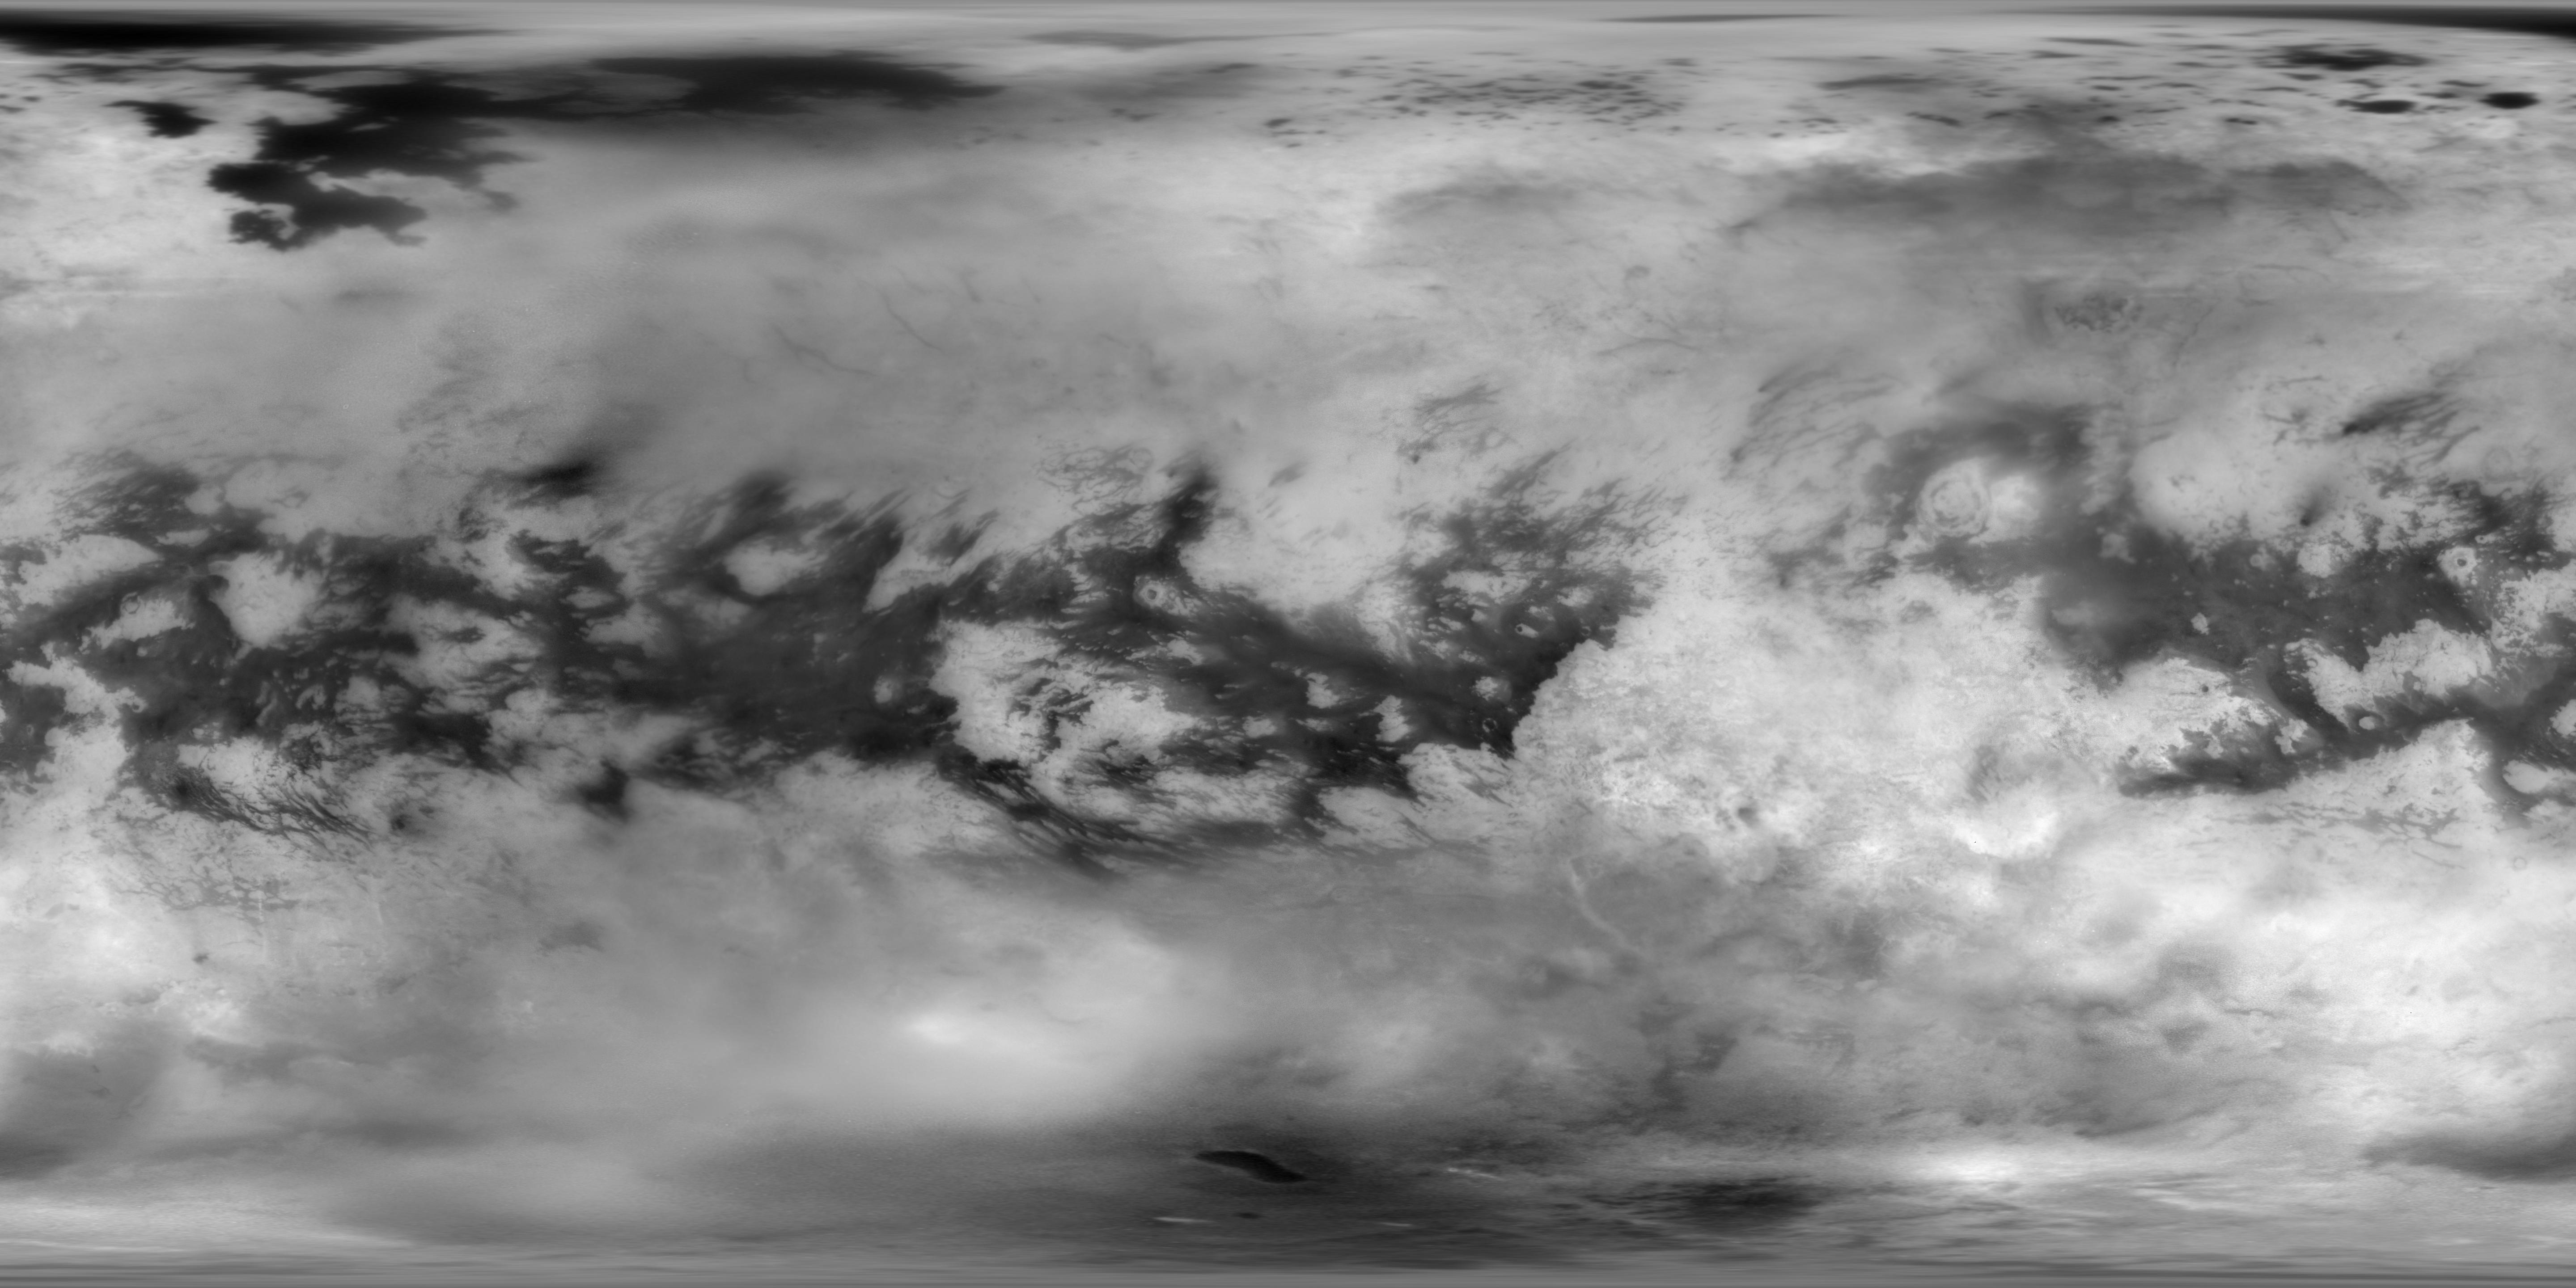 Titan Mosaic: The Surface Under the Haze